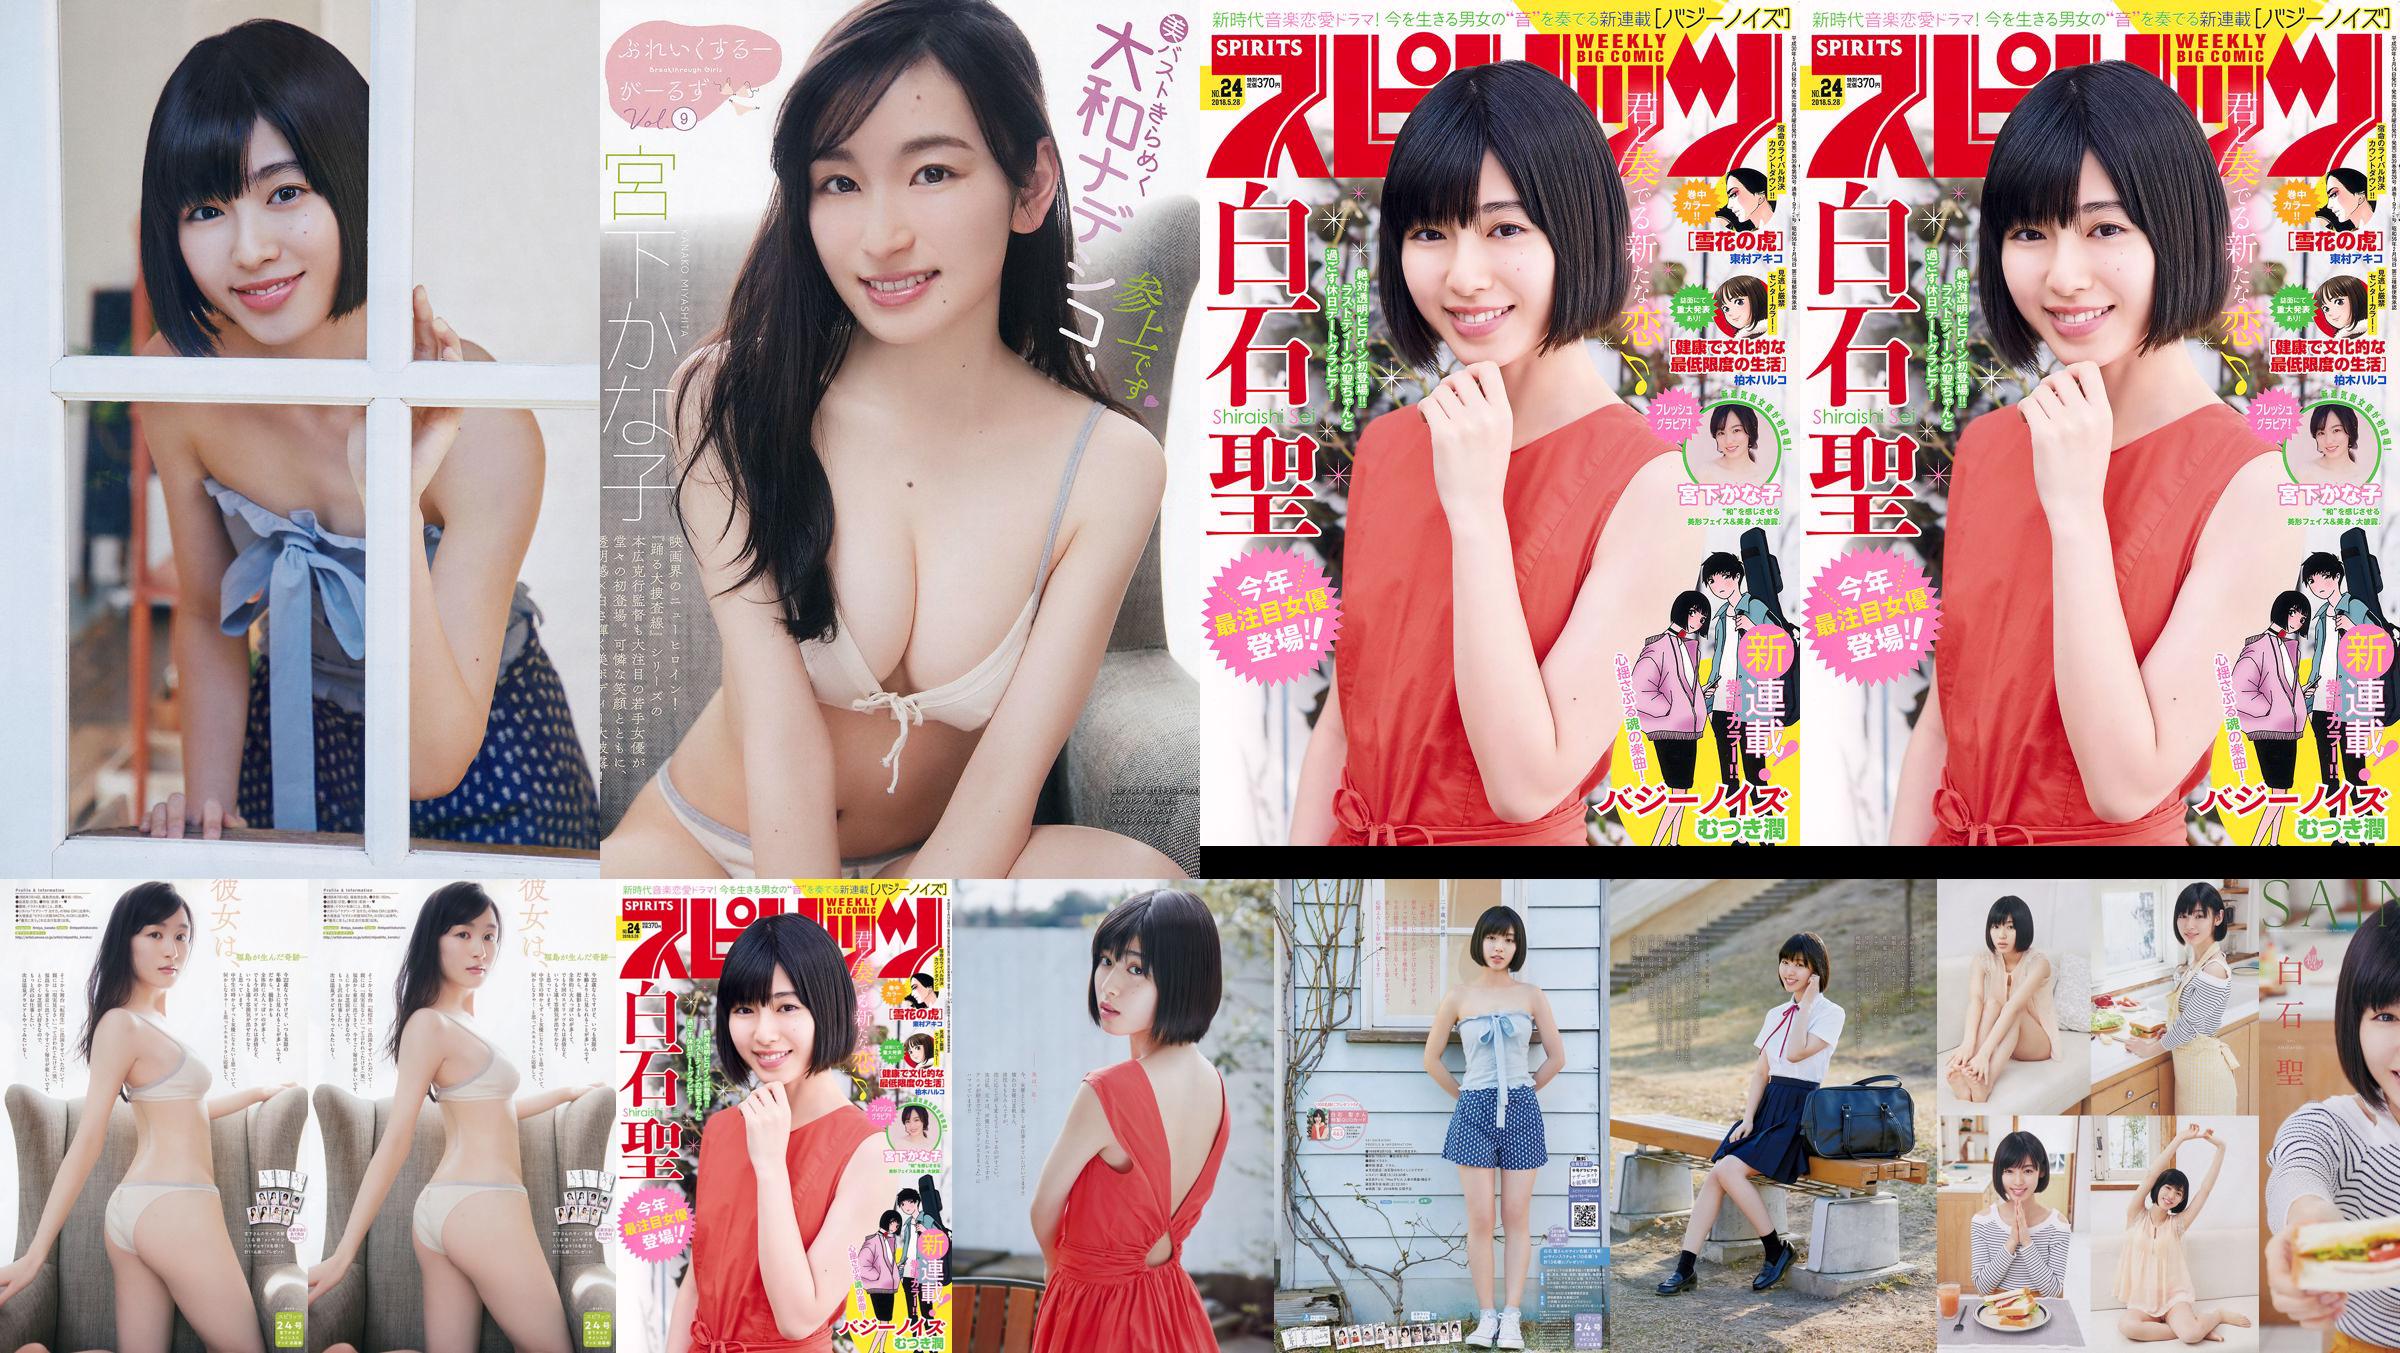 Yuria Kizaki Nana Okada AKB48 Under Girls [Saut hebdomadaire des jeunes] 2015 No.36-37 Photographie No.7c3564 Page 1